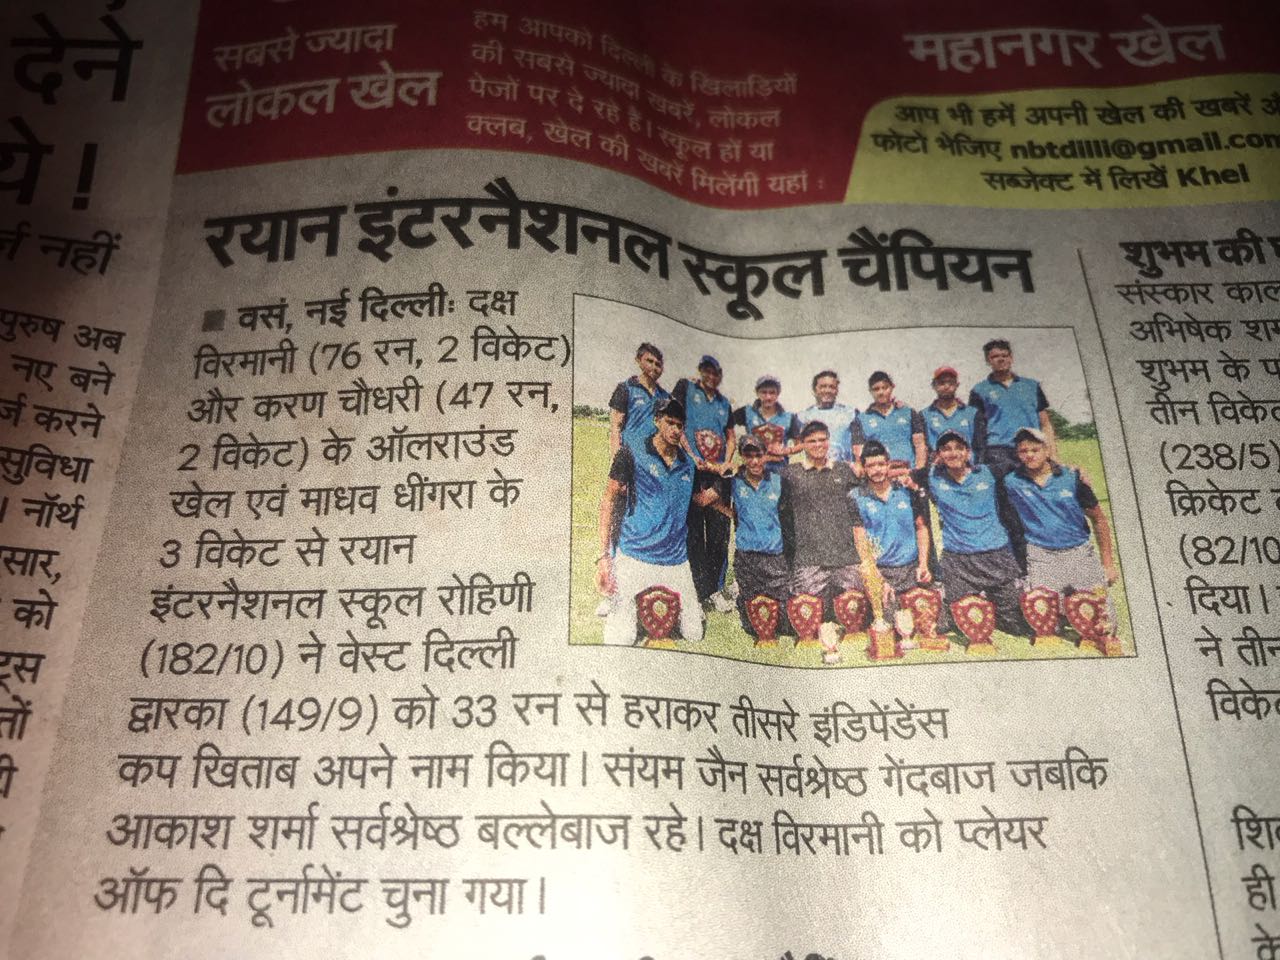 Cricket Tournamnet-Independence Cup - Ryan International School, Sec-25, Rohini